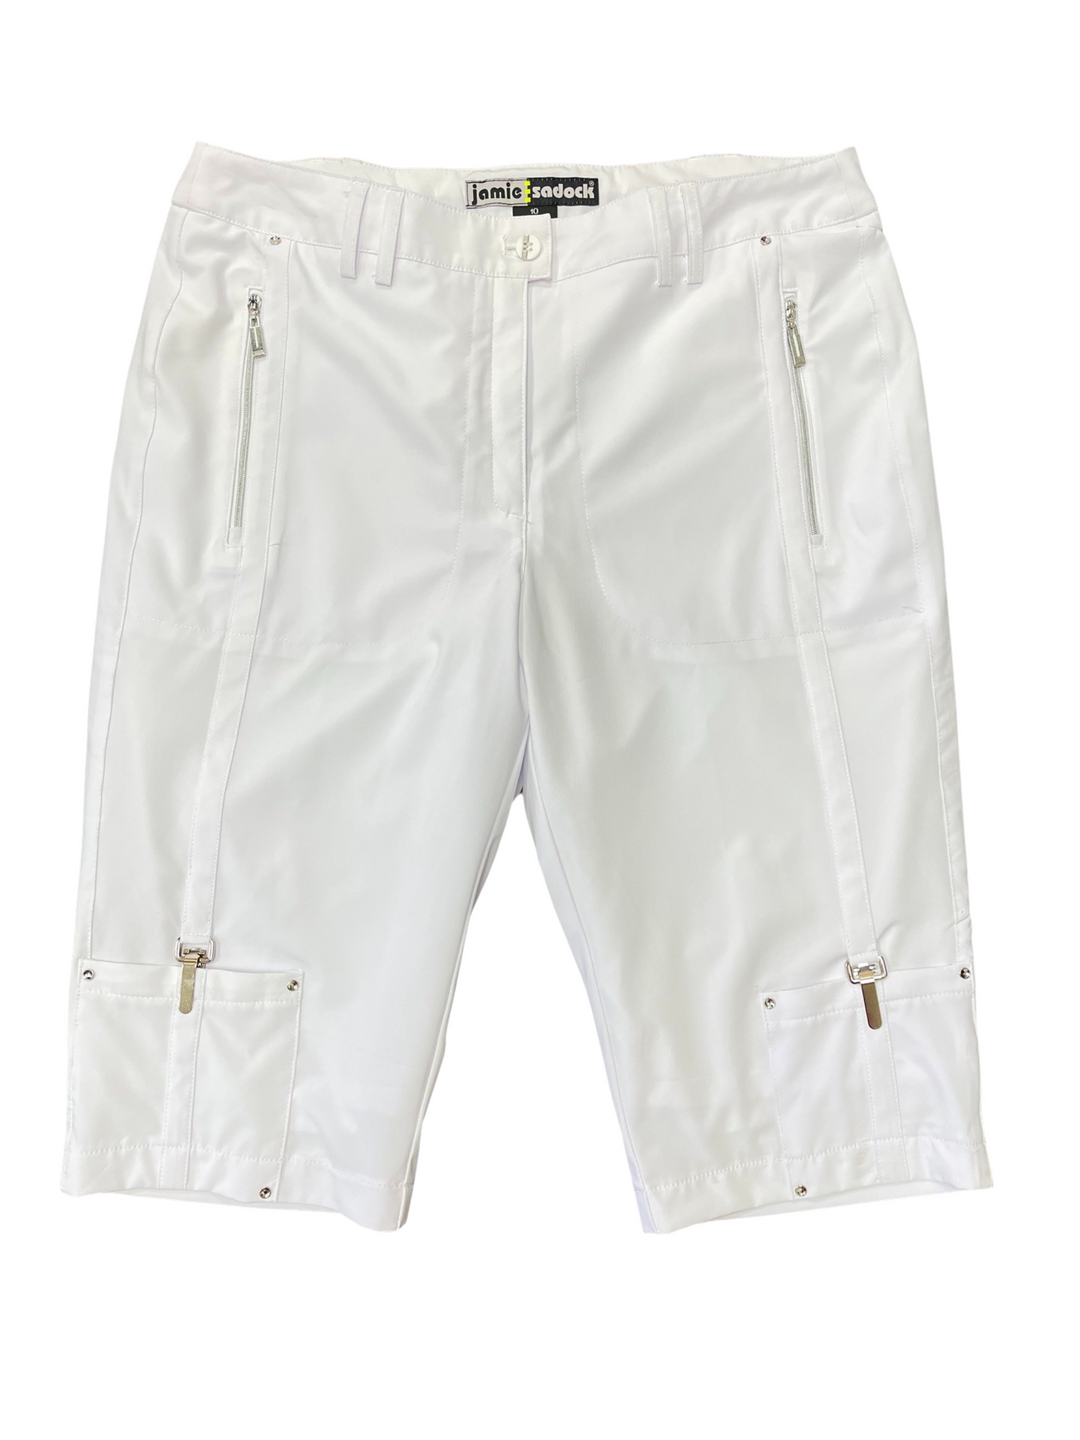 Jamie Sadock Air Wear 14.5" Knee Capri - White - Size 10 - Skorzie